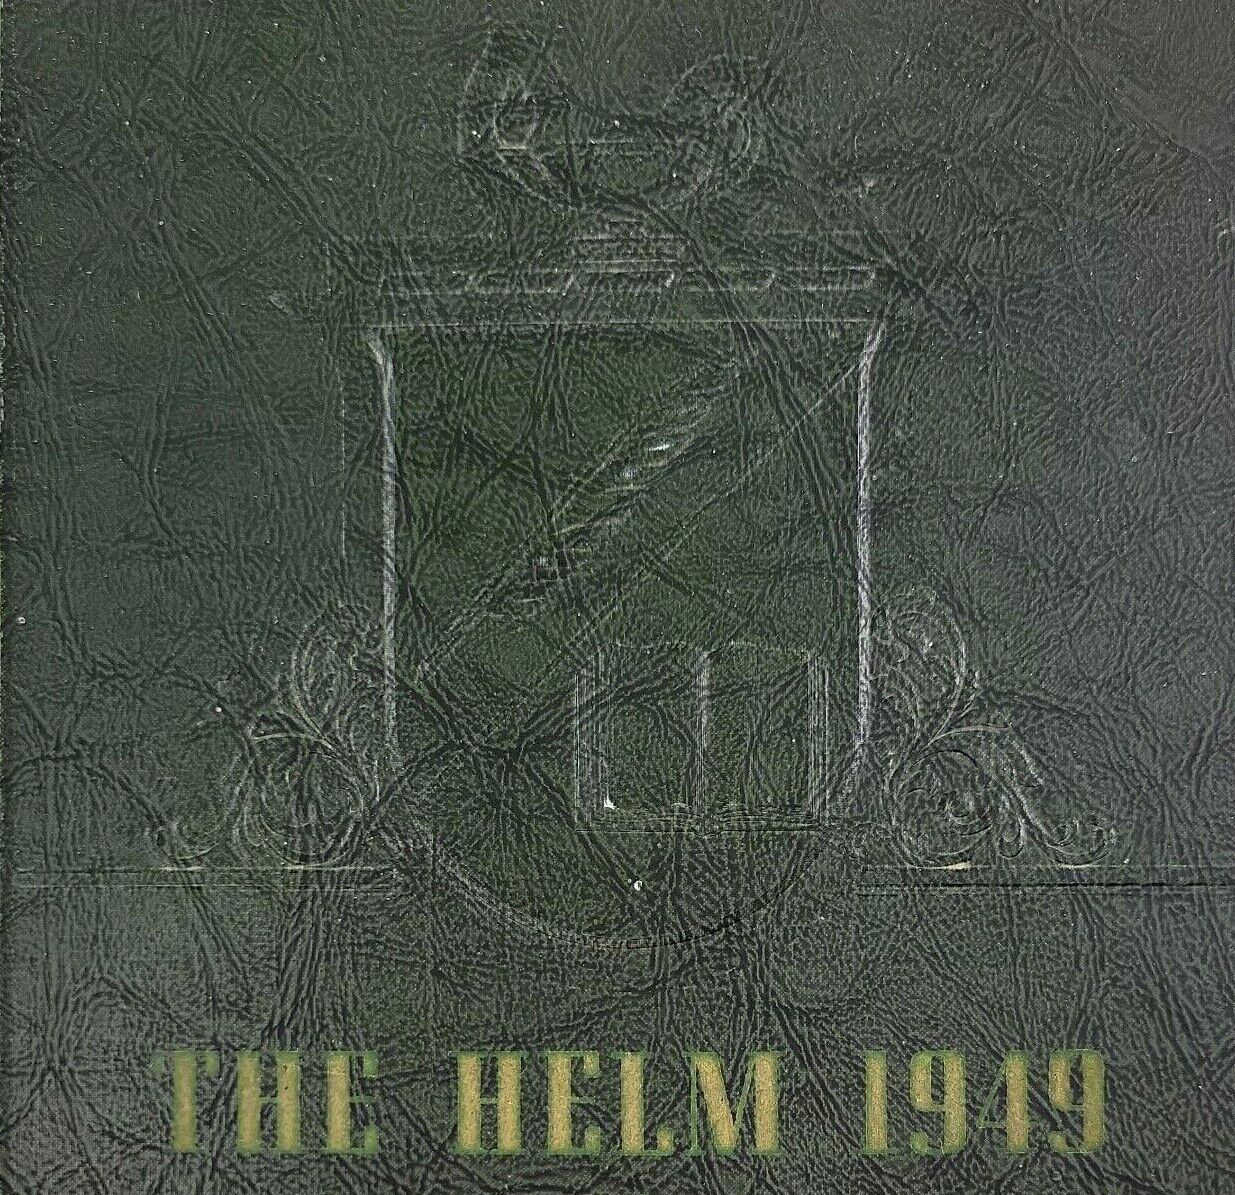 Harris Elmore School Yearbook 1949 The Helm Grades 1 thru 12 Ohio Annual